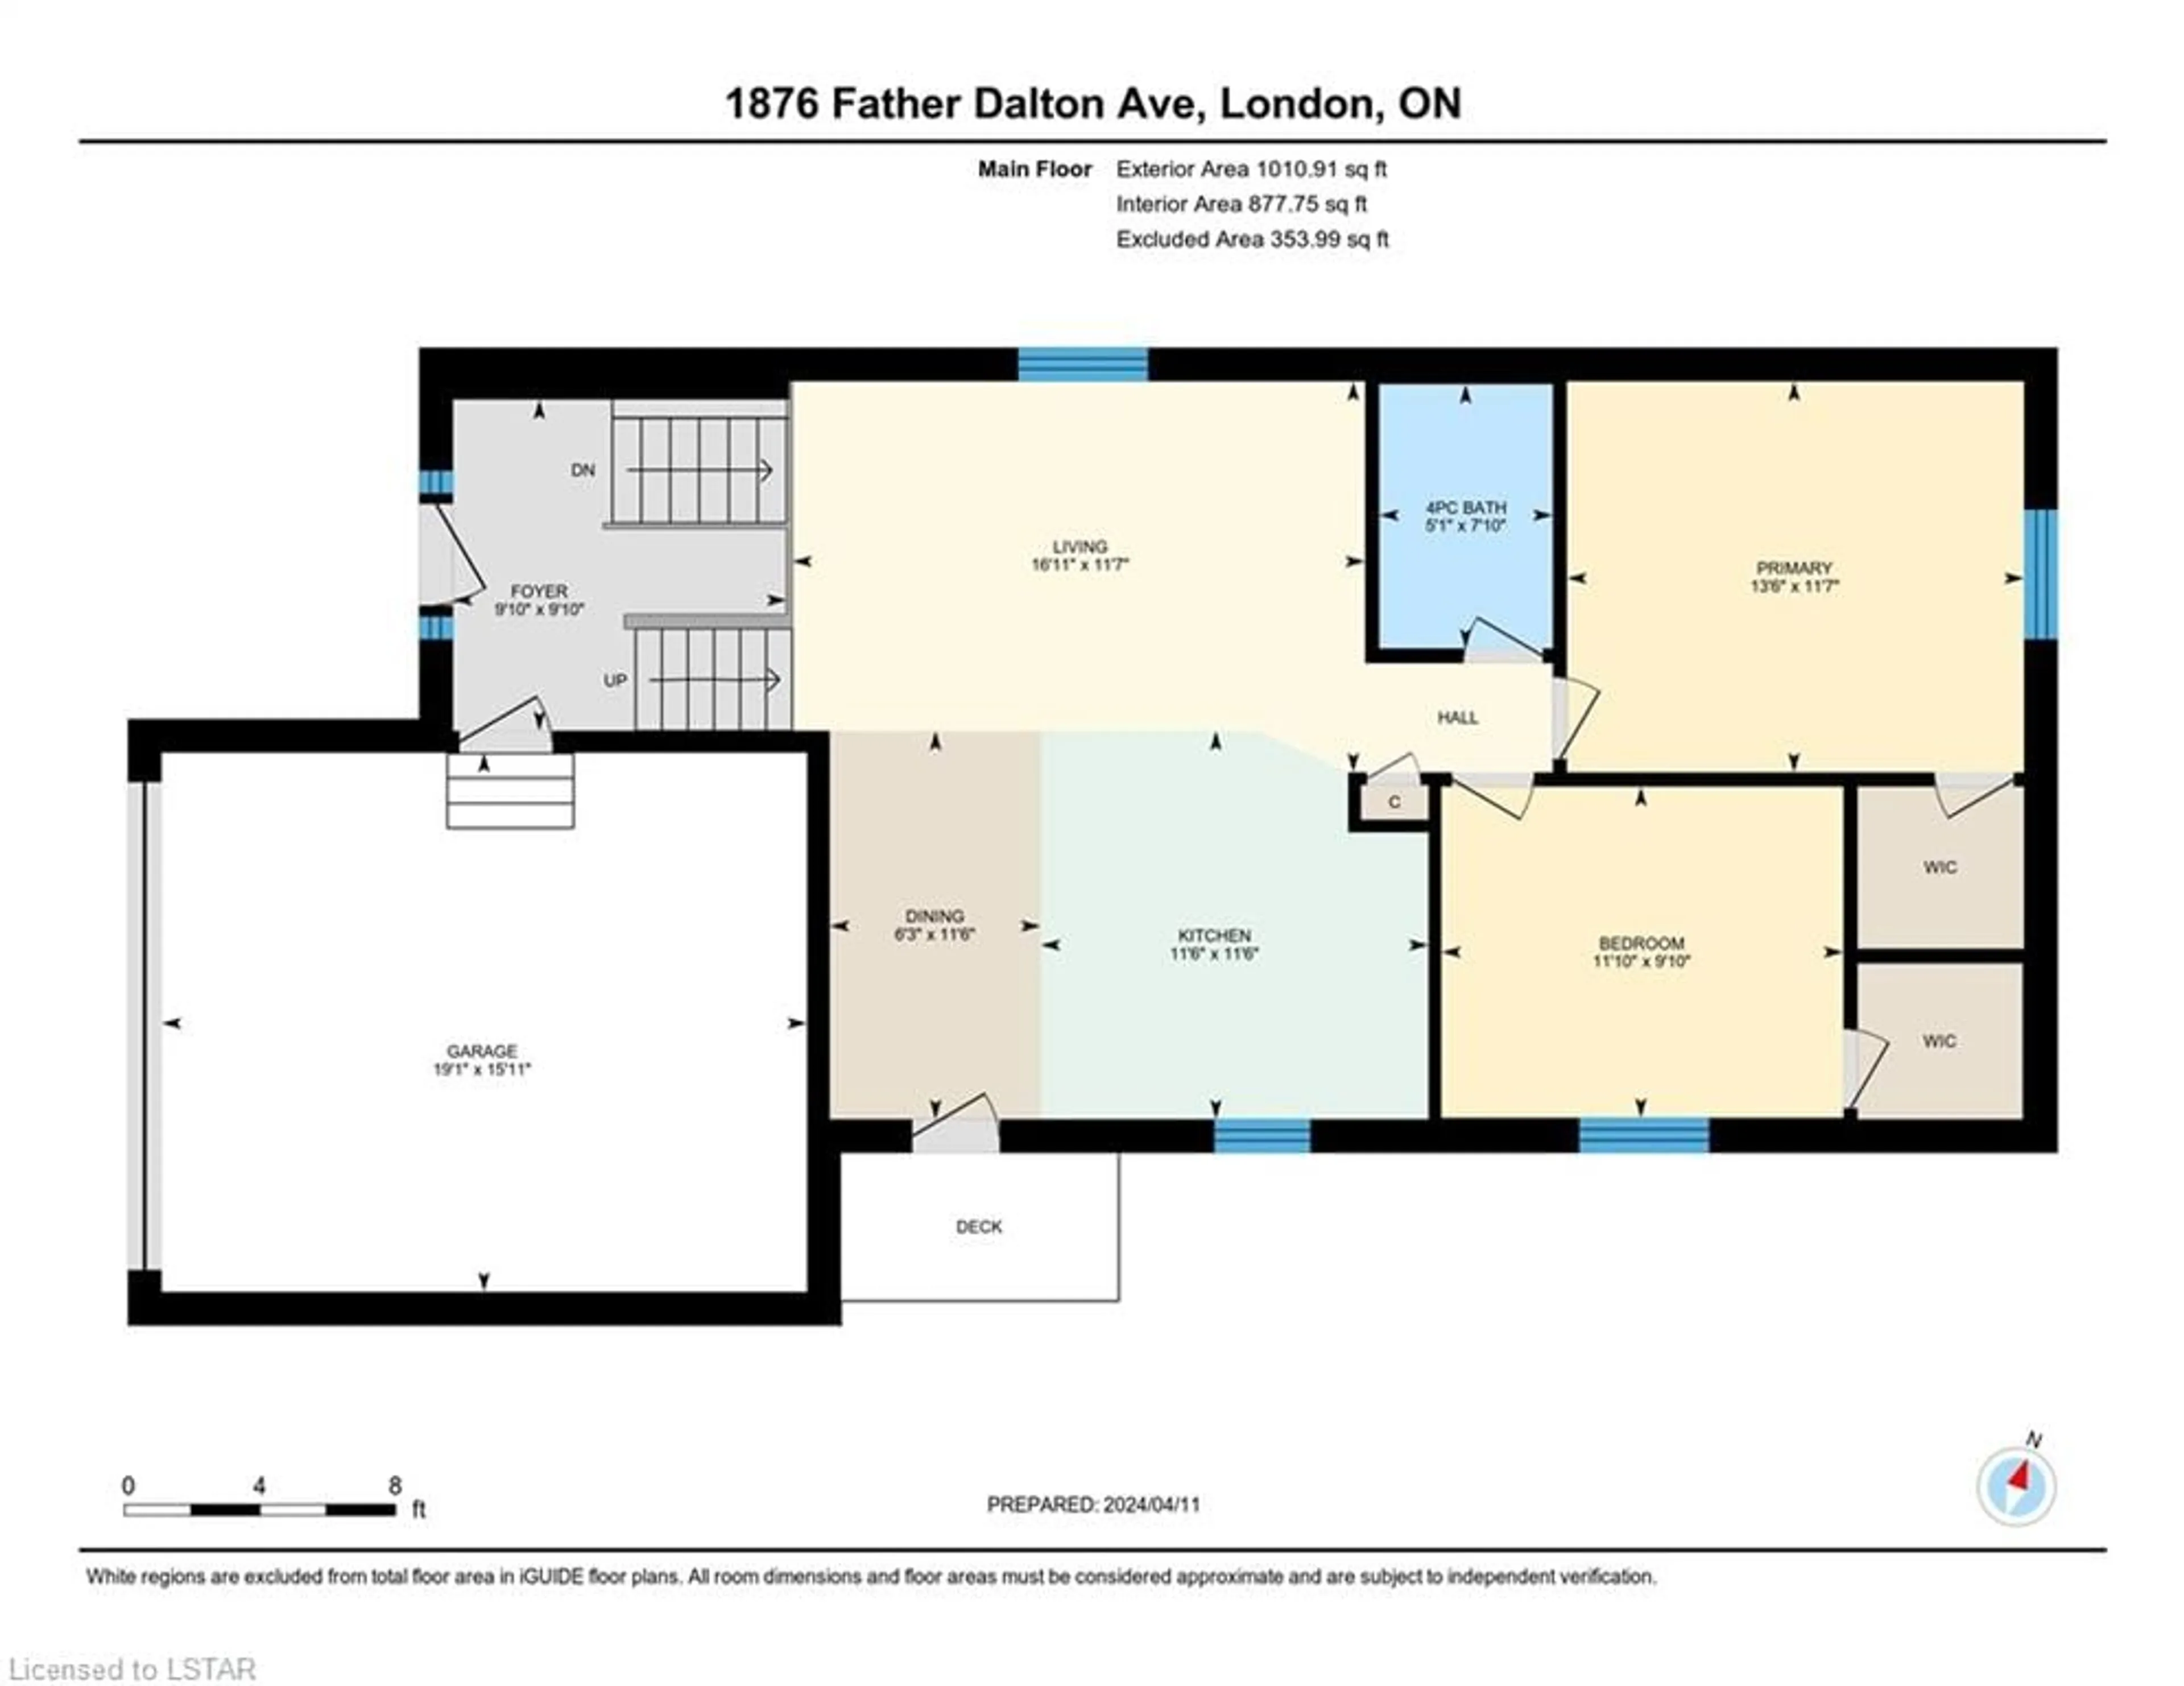 Floor plan for 1876 Father Dalton Ave, London Ontario N5X 4P1